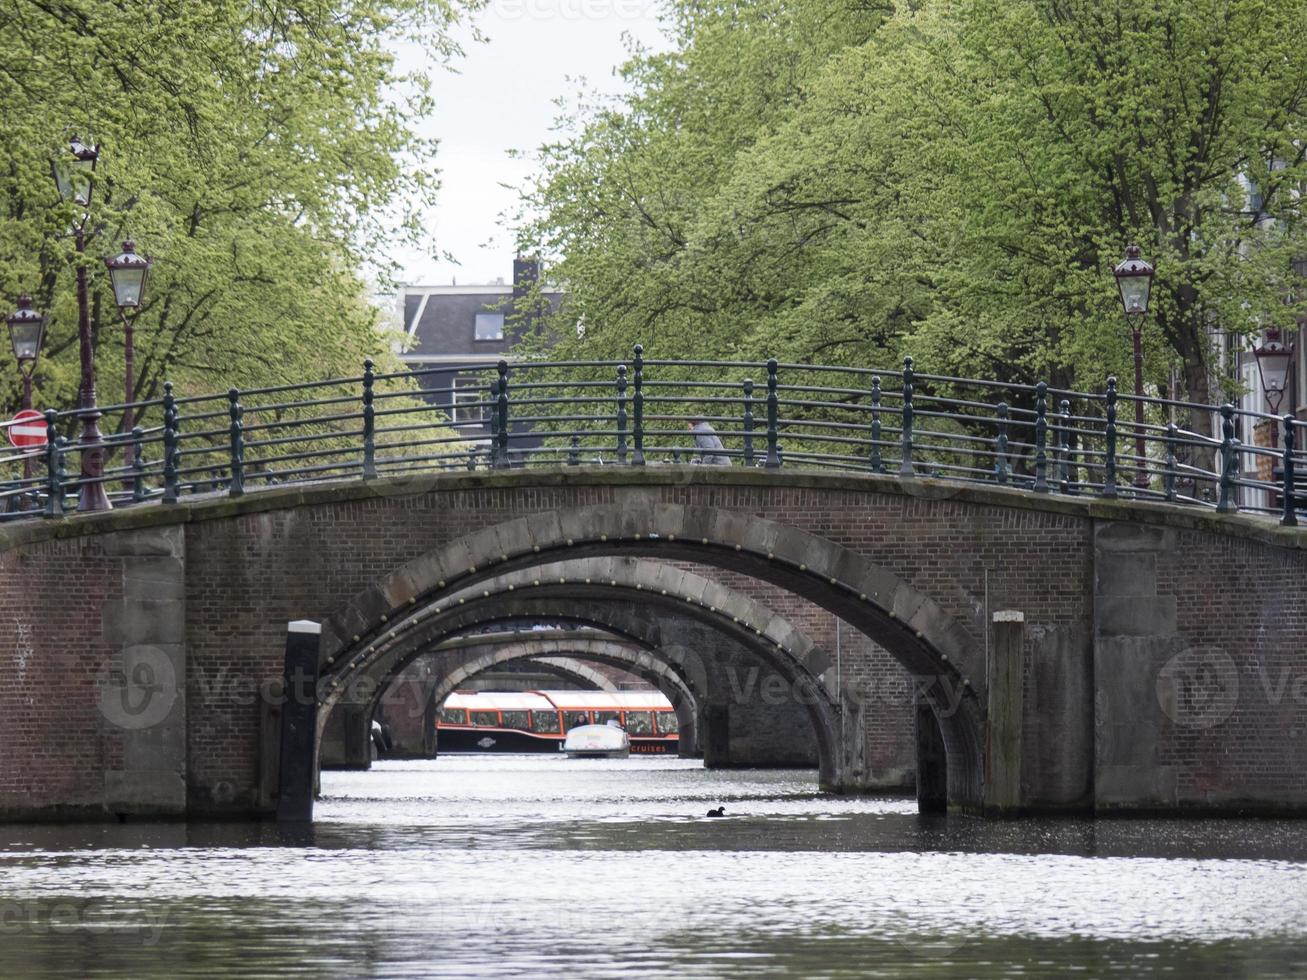 the dutch city Amsterdam photo